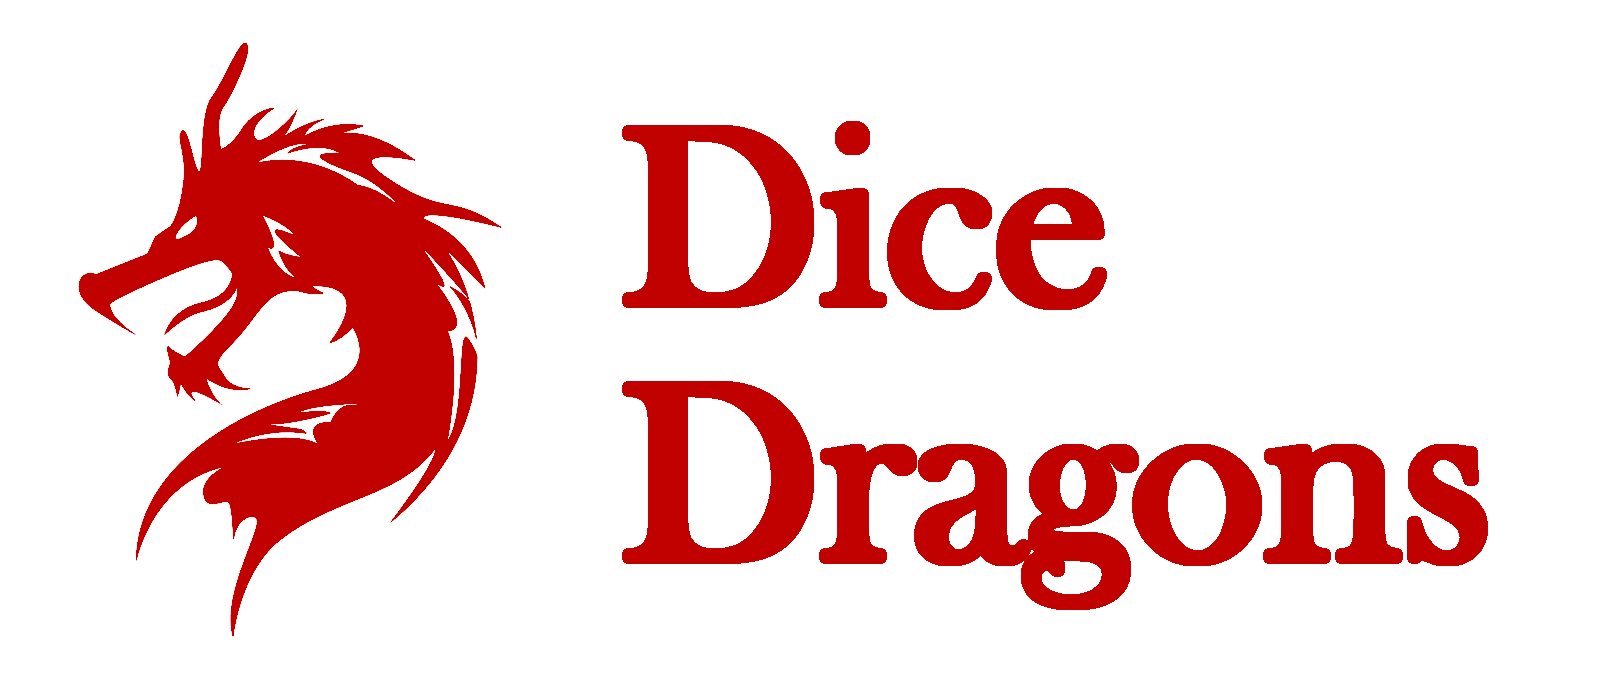 Dice Dragons logo